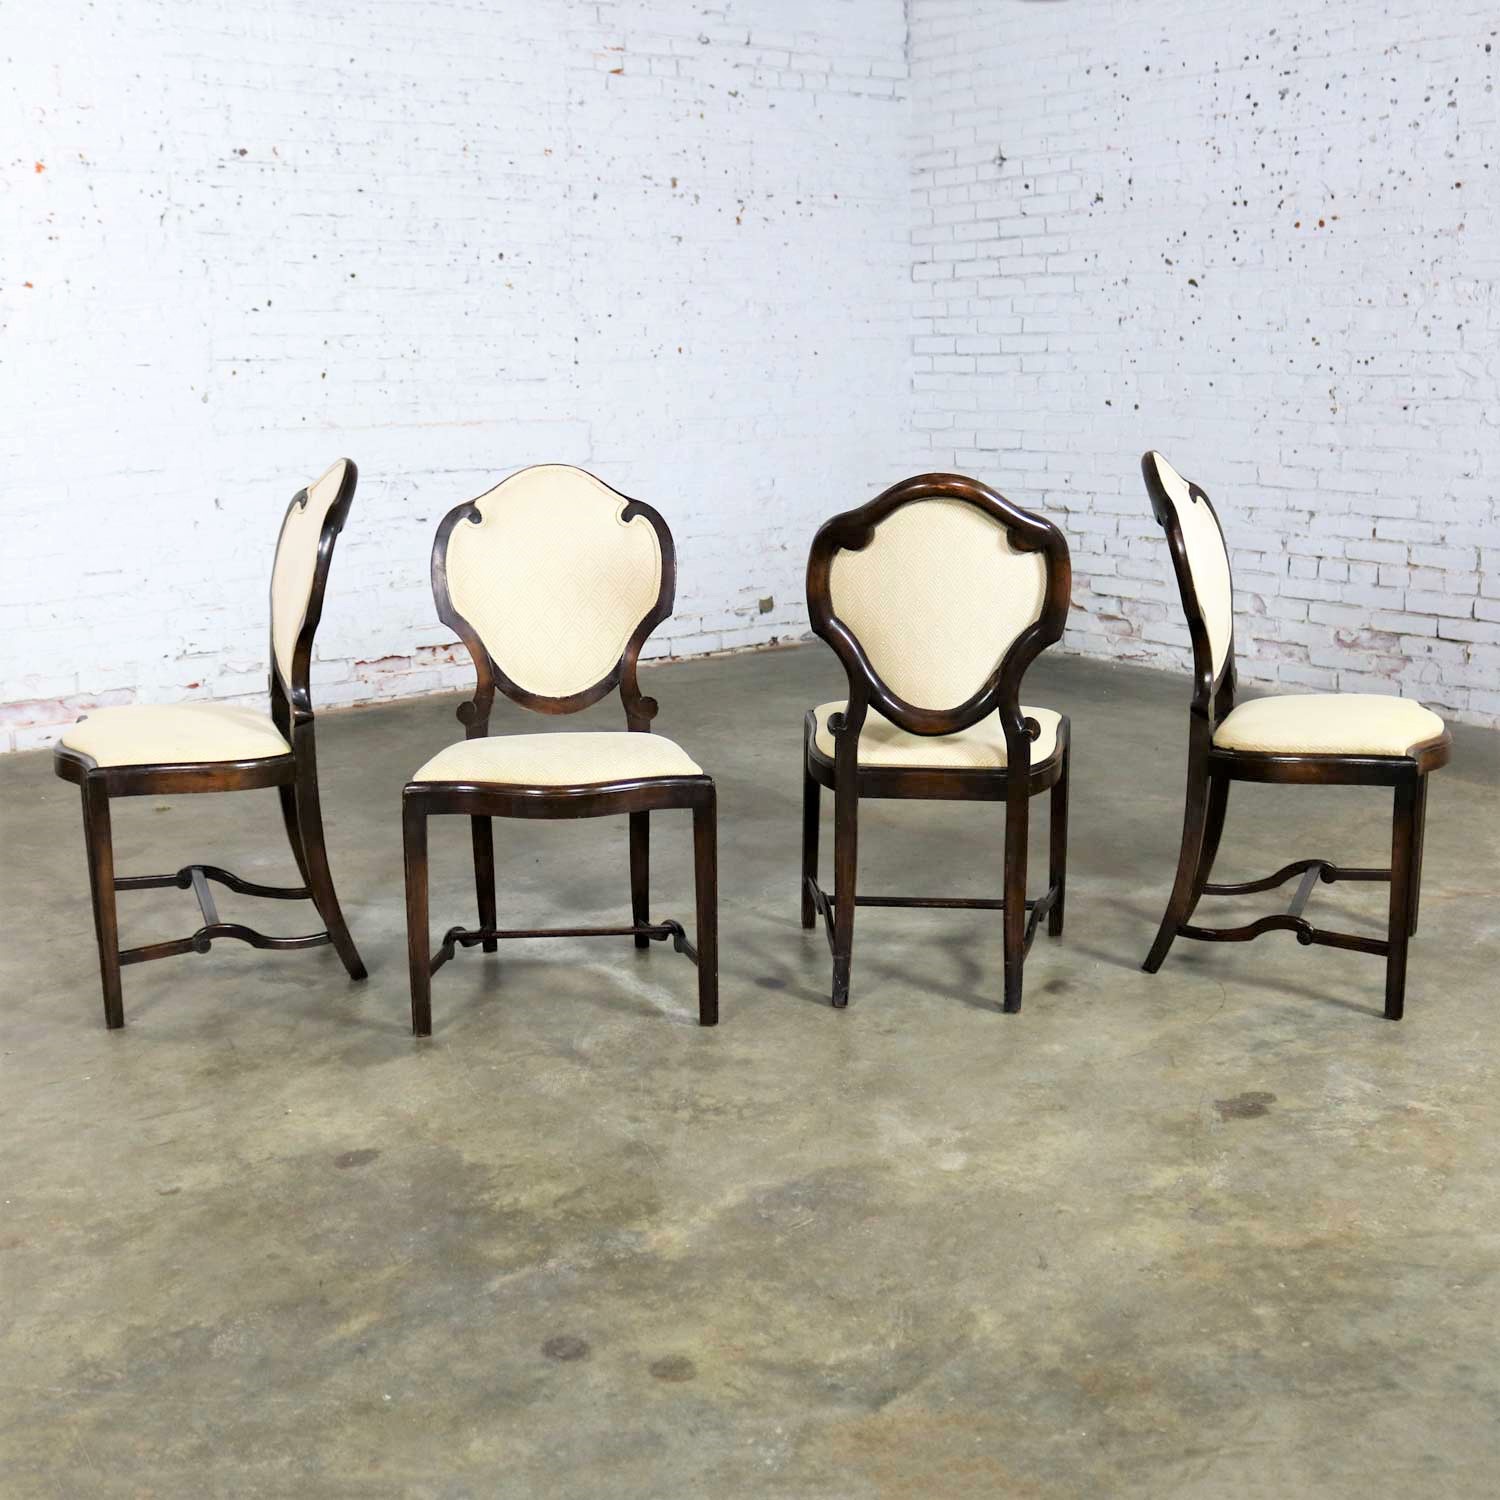 Art Nouveau or Art Deco Shield Back Antique Dining Chairs Set of Four